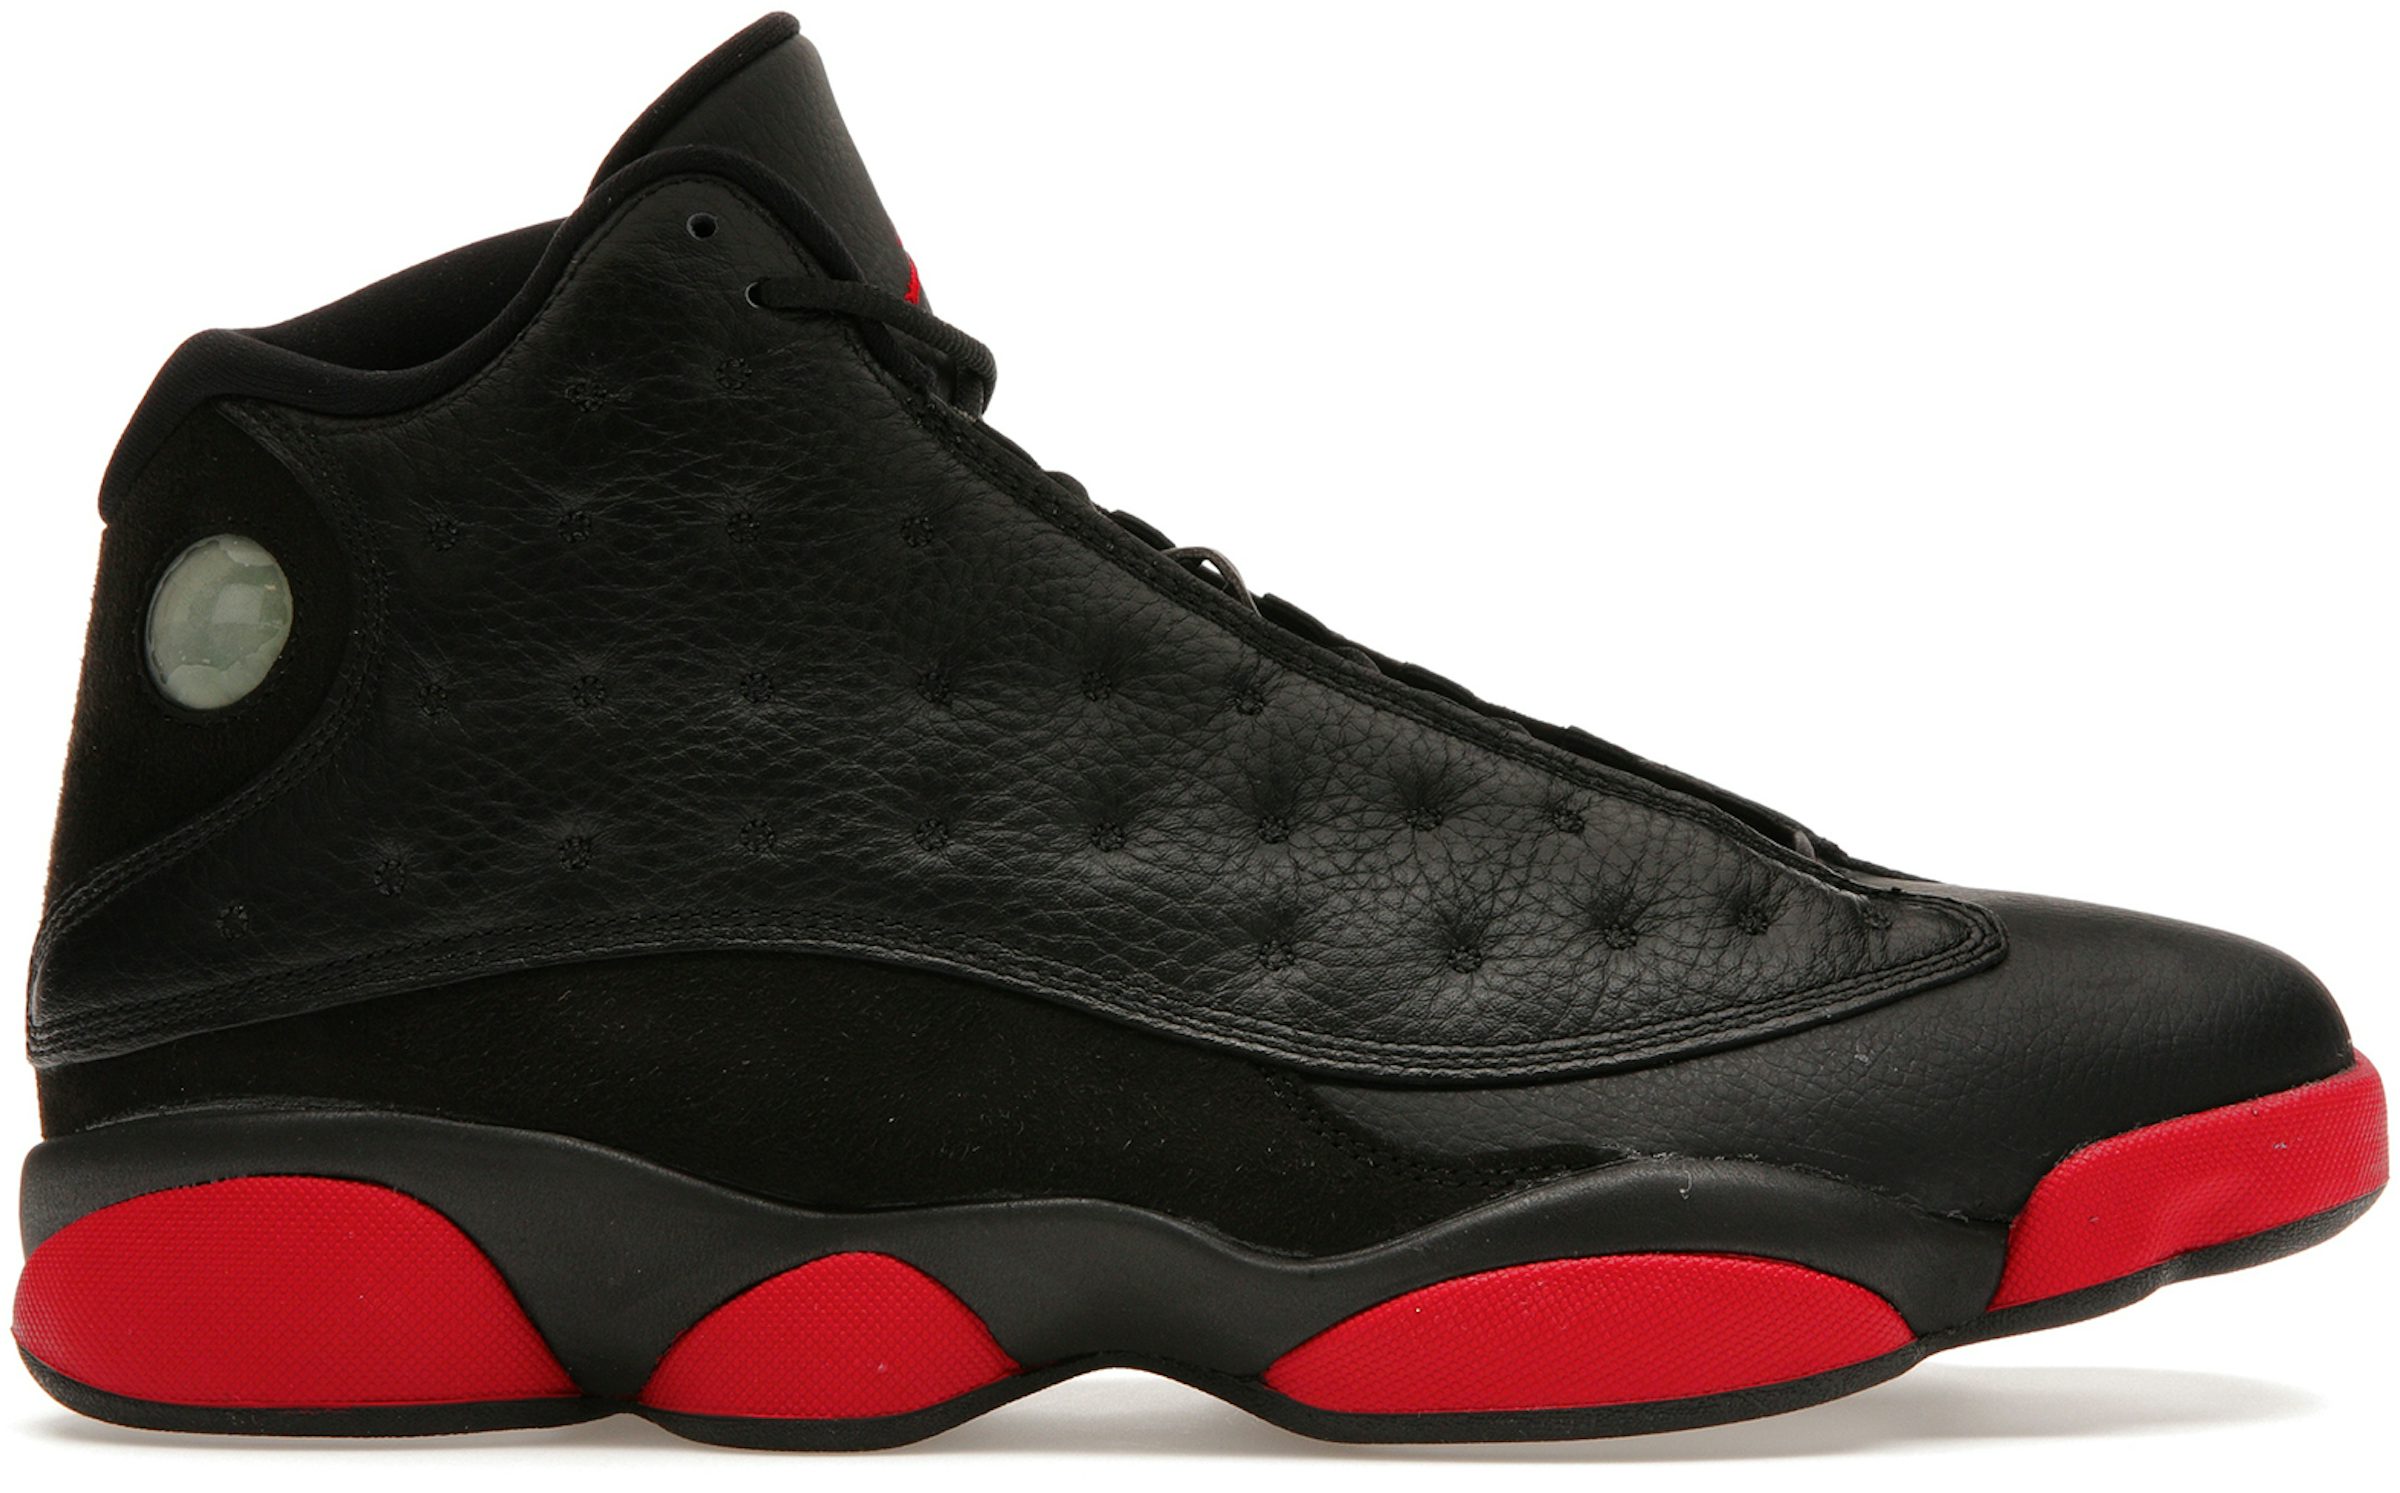 Air Jordan 13 Retro Dirty Bred Men's Shoe - Black/Gym Red/Black - 11.5